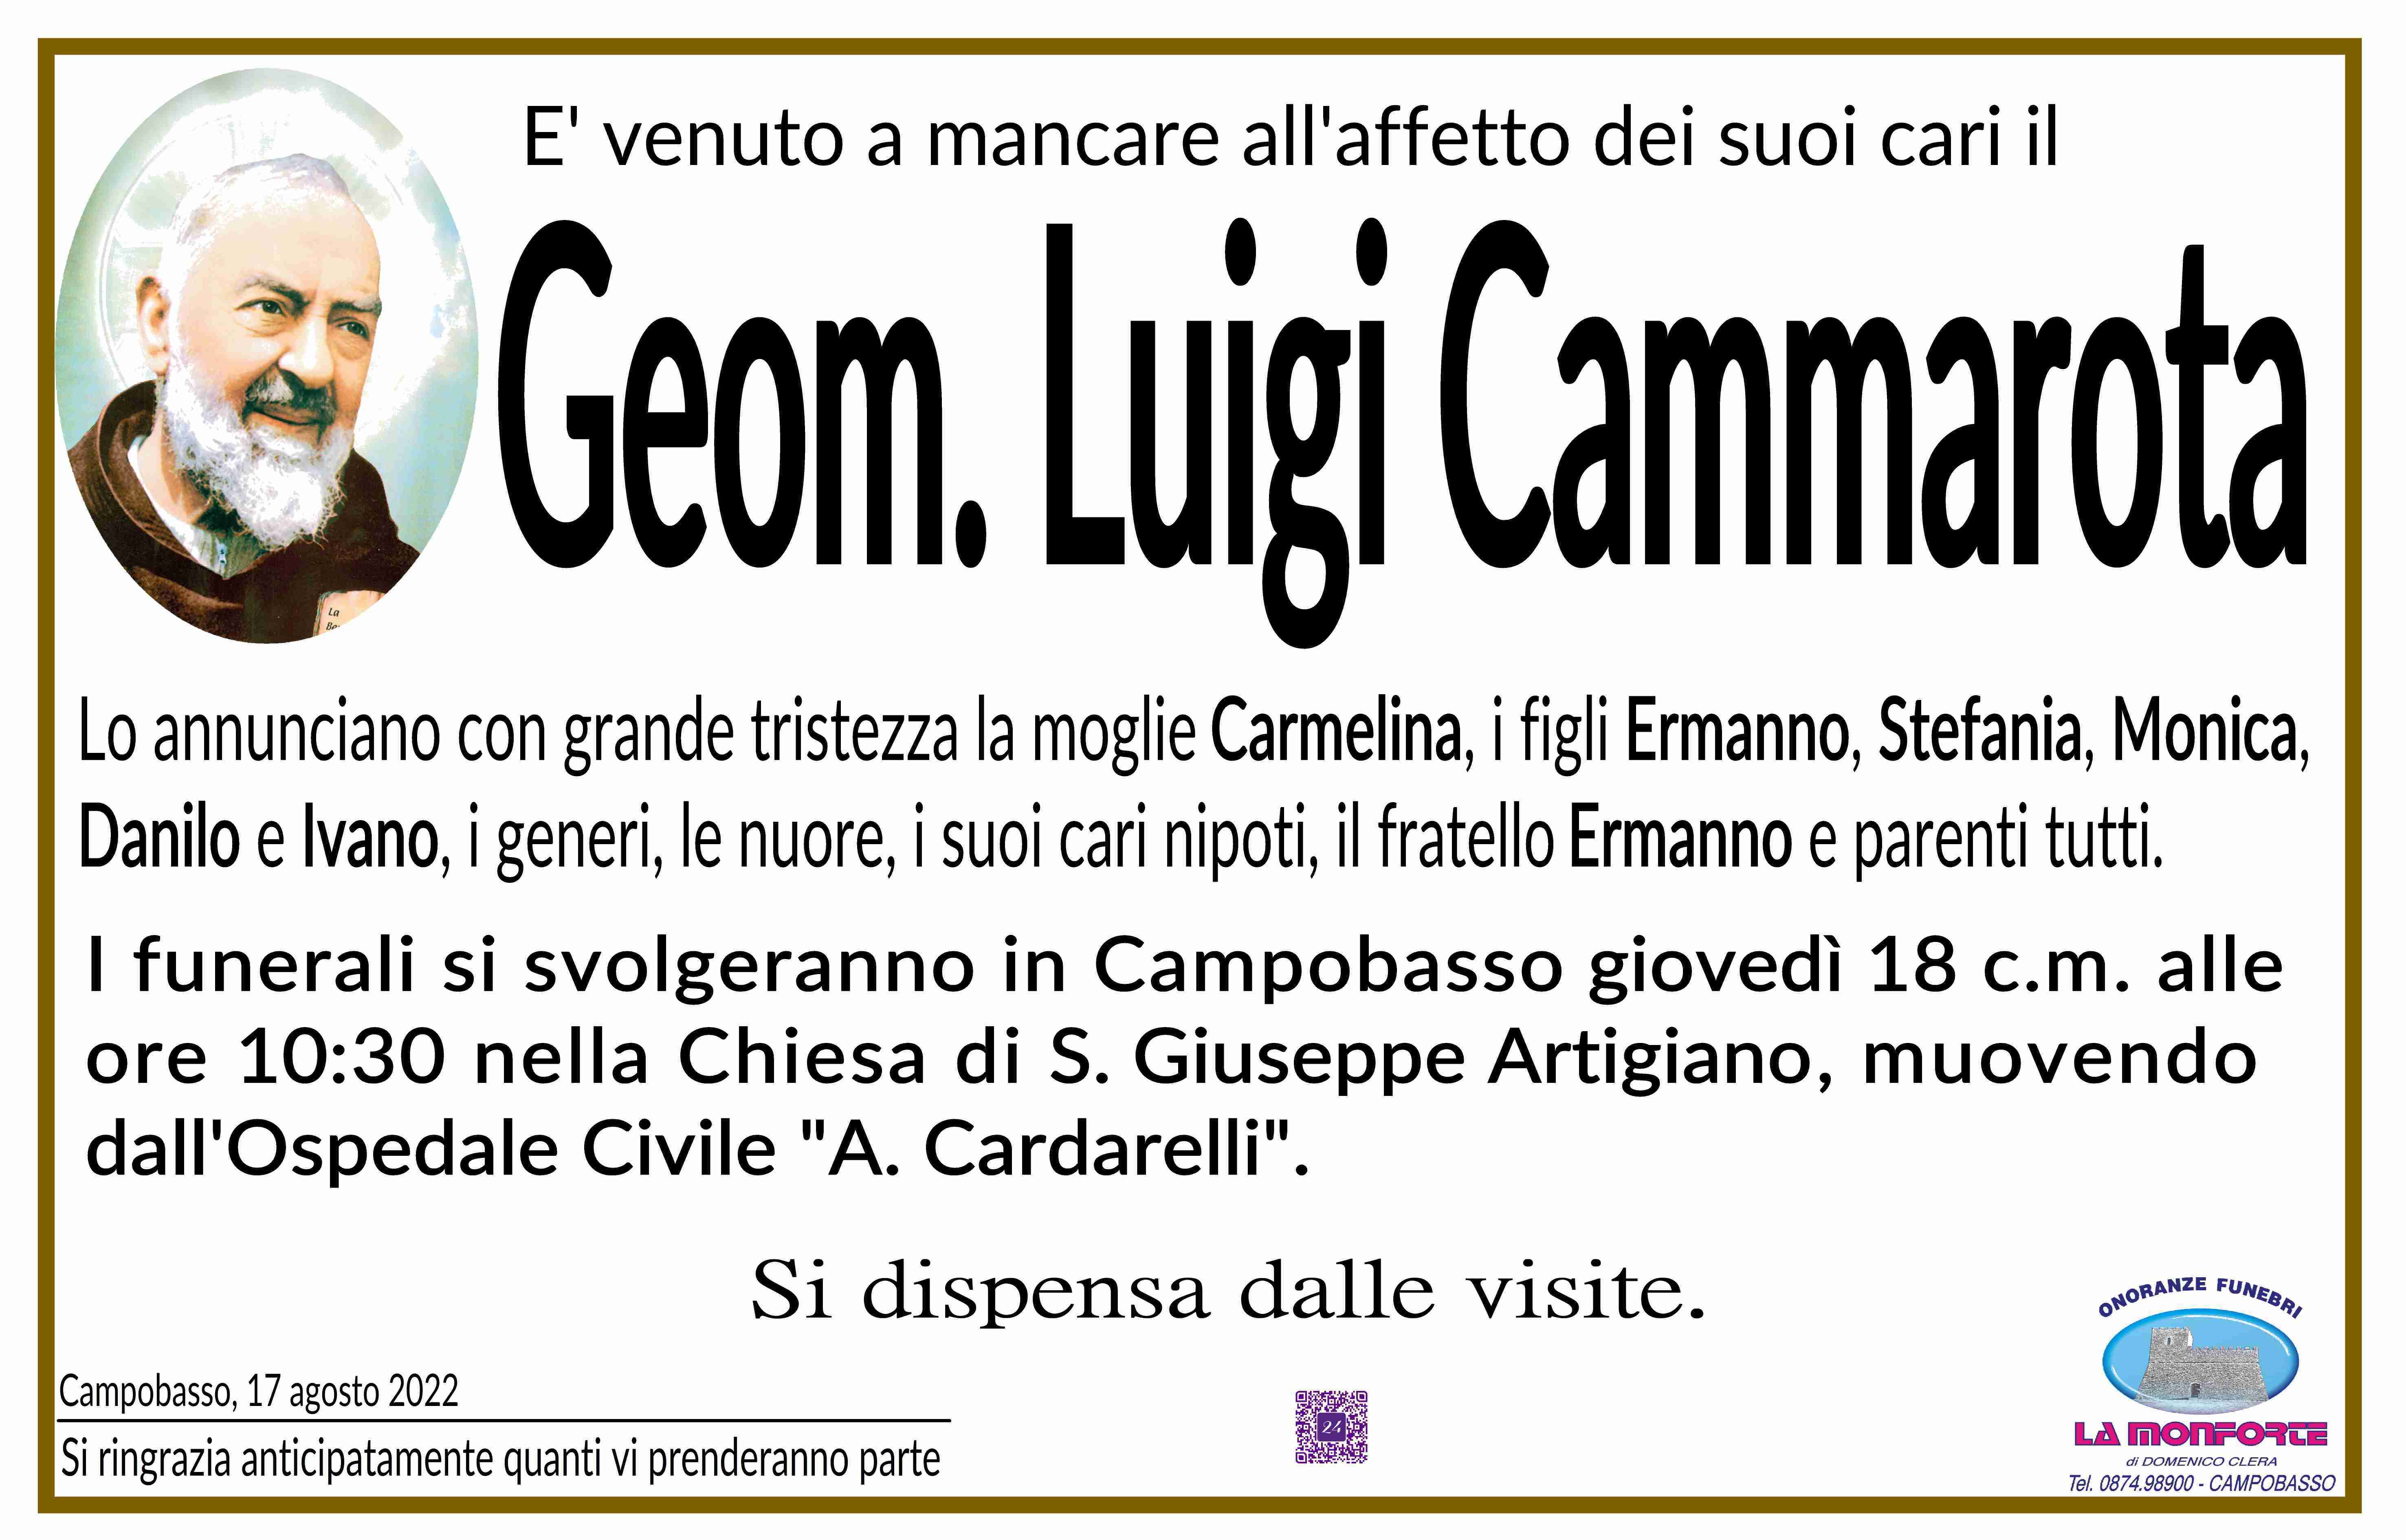 Luigi Cammarota